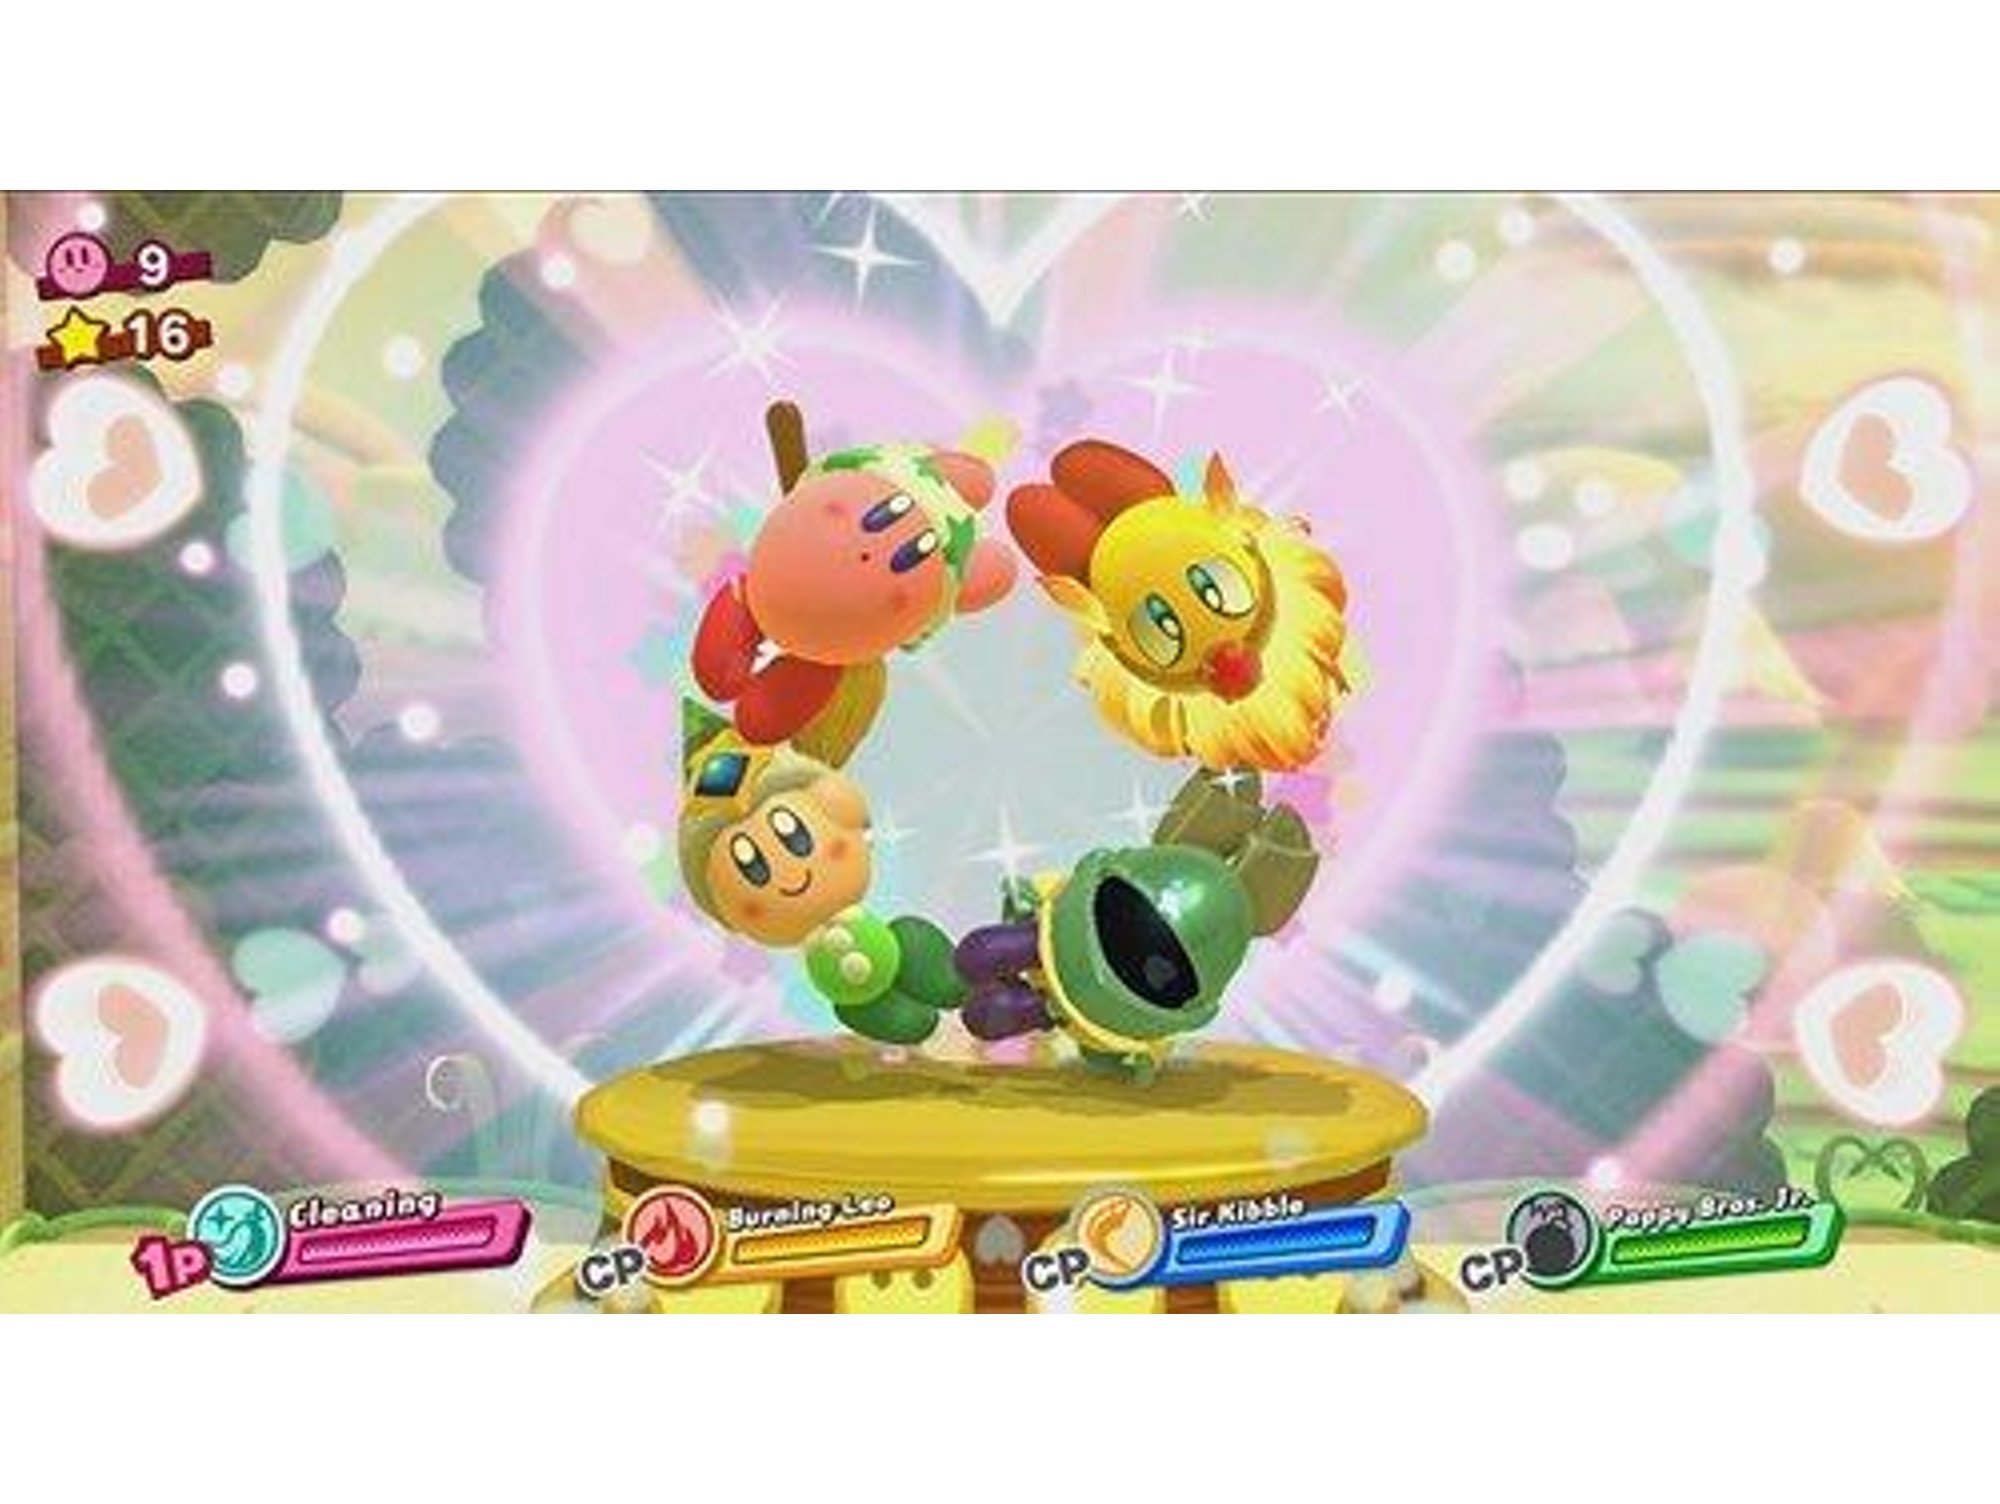 Juego Nintendo Switch Kirby Star Allies